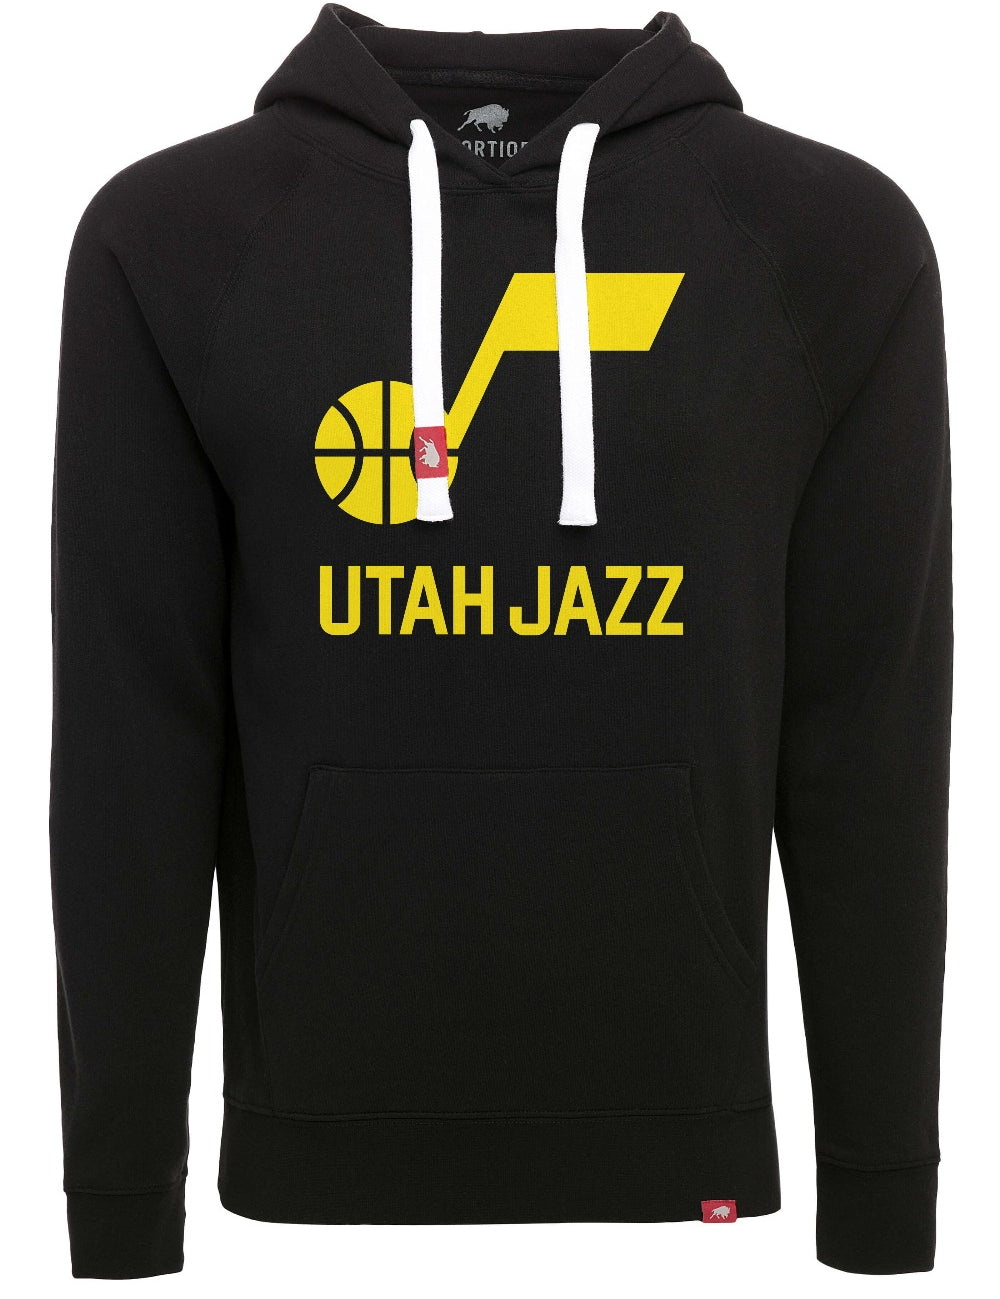 Collections – Utah Jazz Team Store